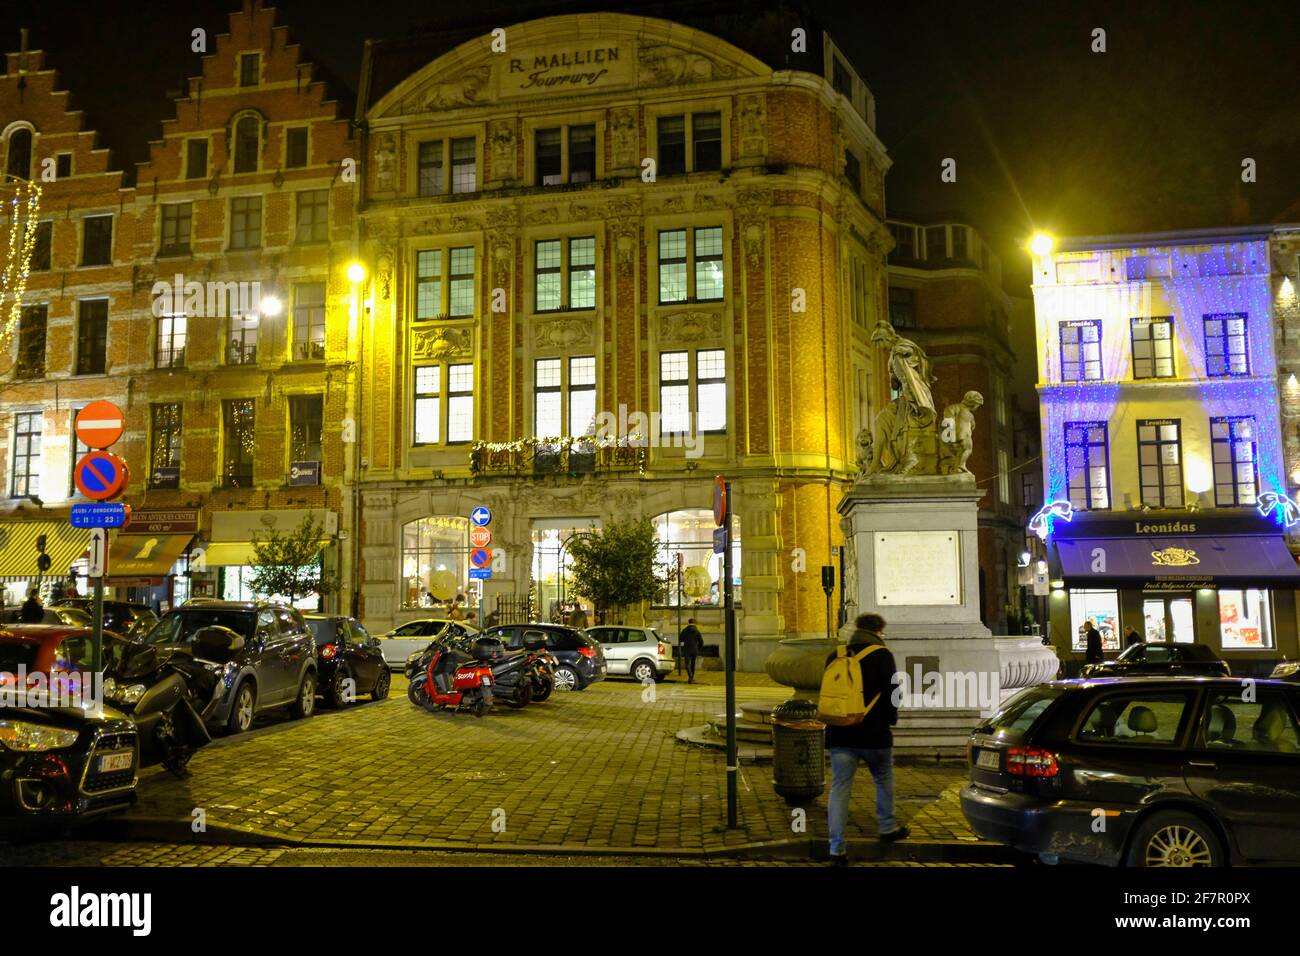 14.12.2019, Bruessel, Belgien - historische Hausfassaden am noblen Platz Grand Sablon in Bruessel bei Nacht Foto Stock